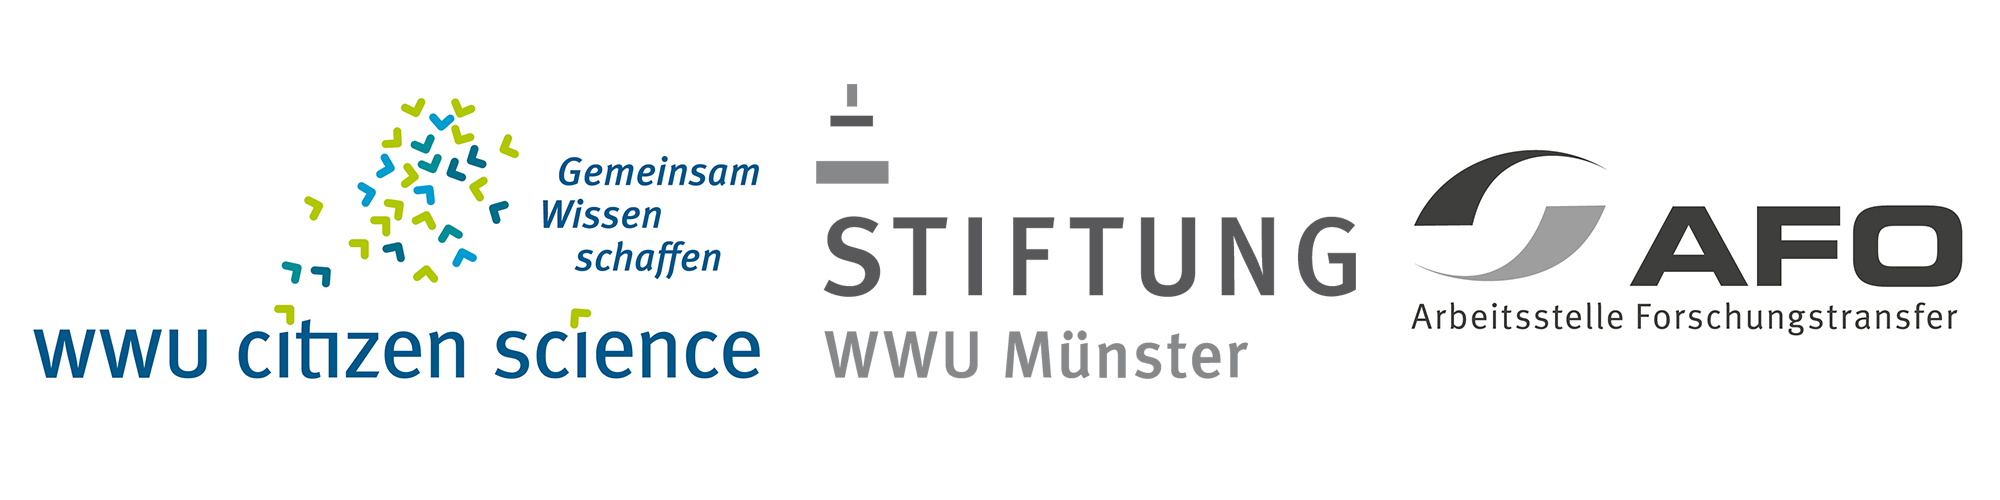 Stiftung WWU Citizen Science Arbeitsstelle Forschung Logo